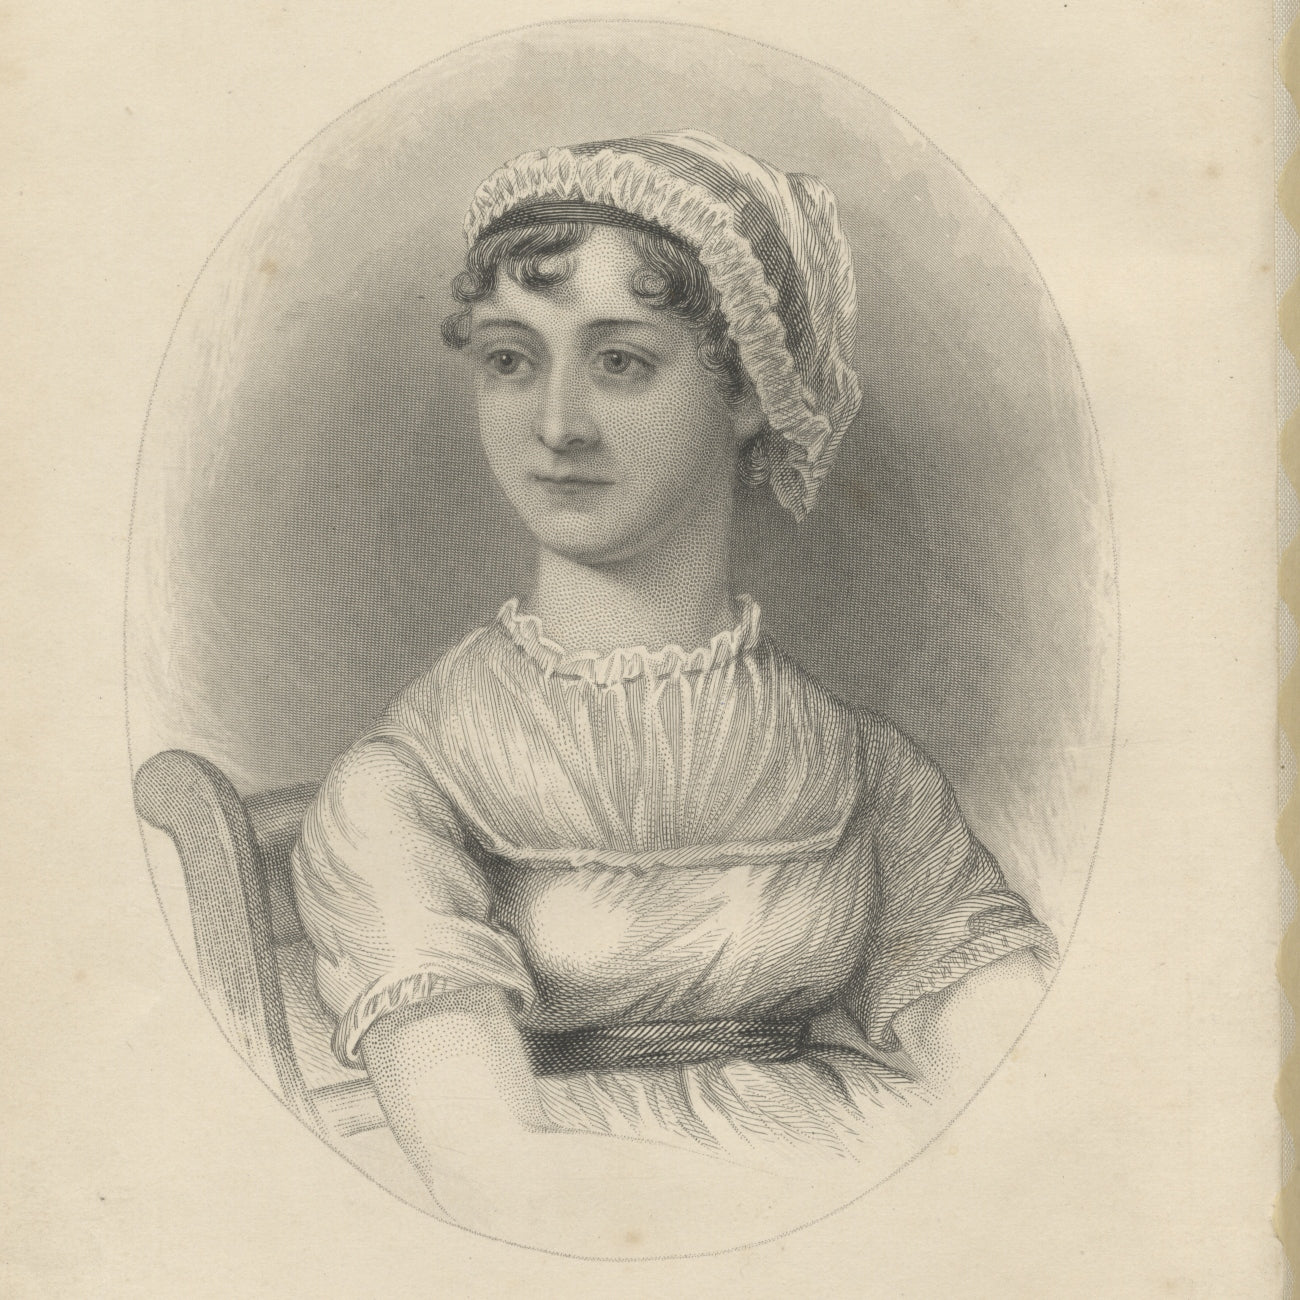 Portrait of Jane Austen, based on a sketch by her sister Cassandra